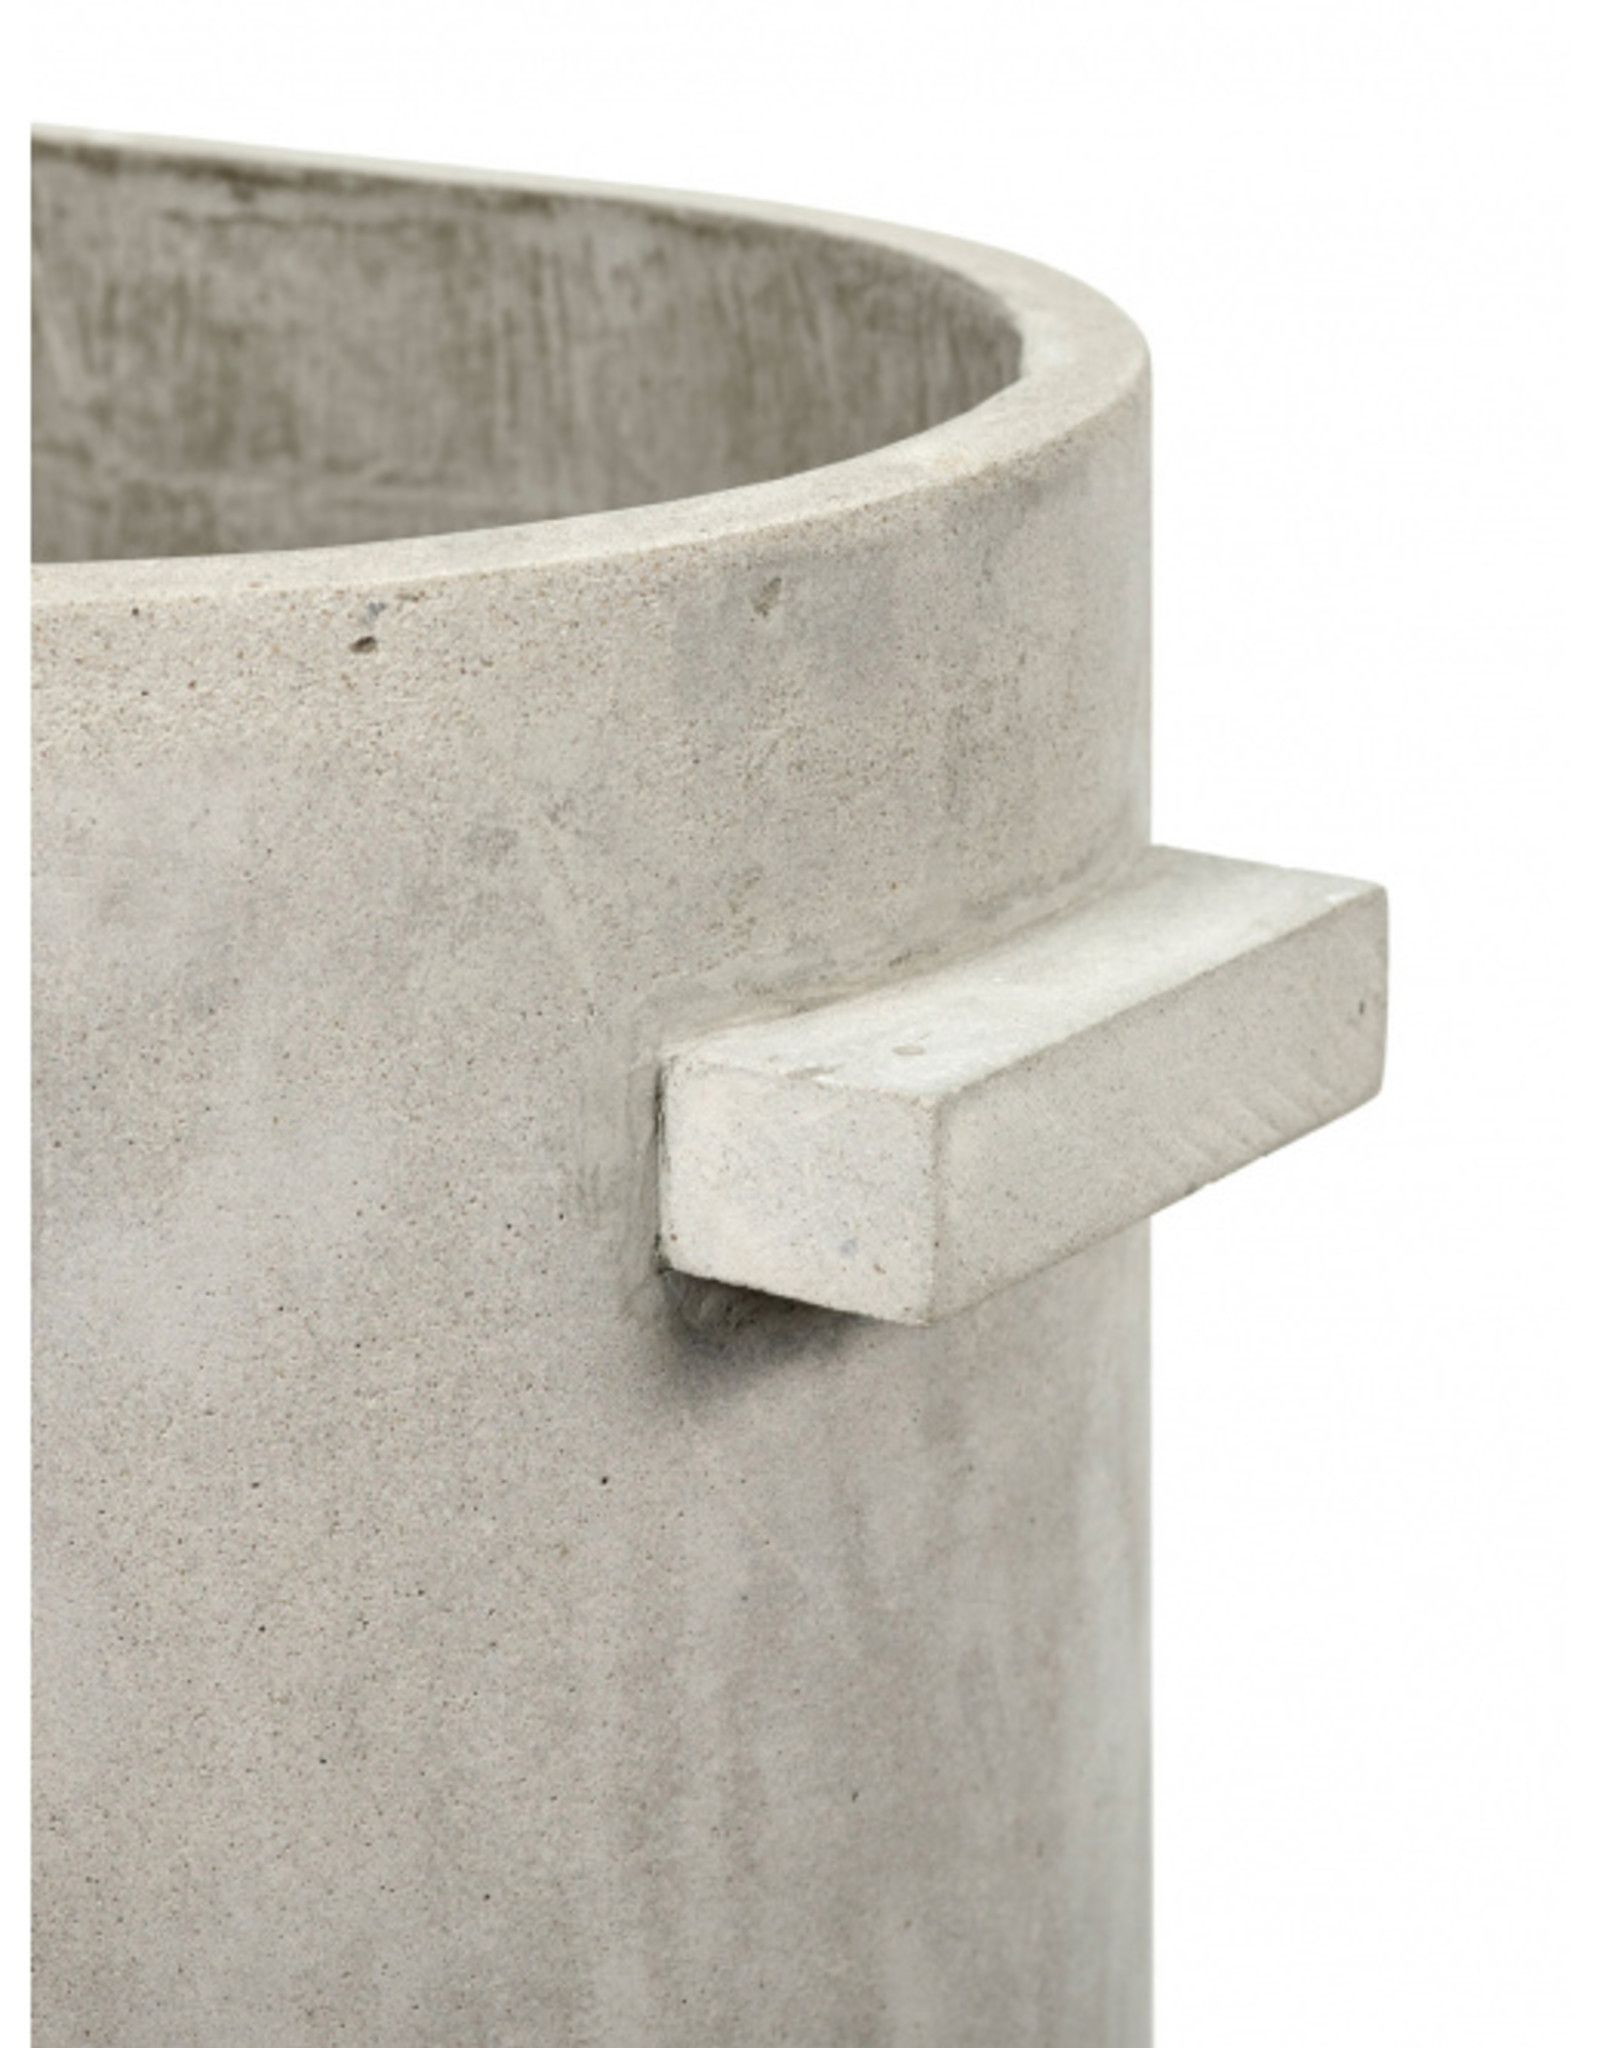 Serax Pot 'Concrete' ovaal 34 x 23 cm